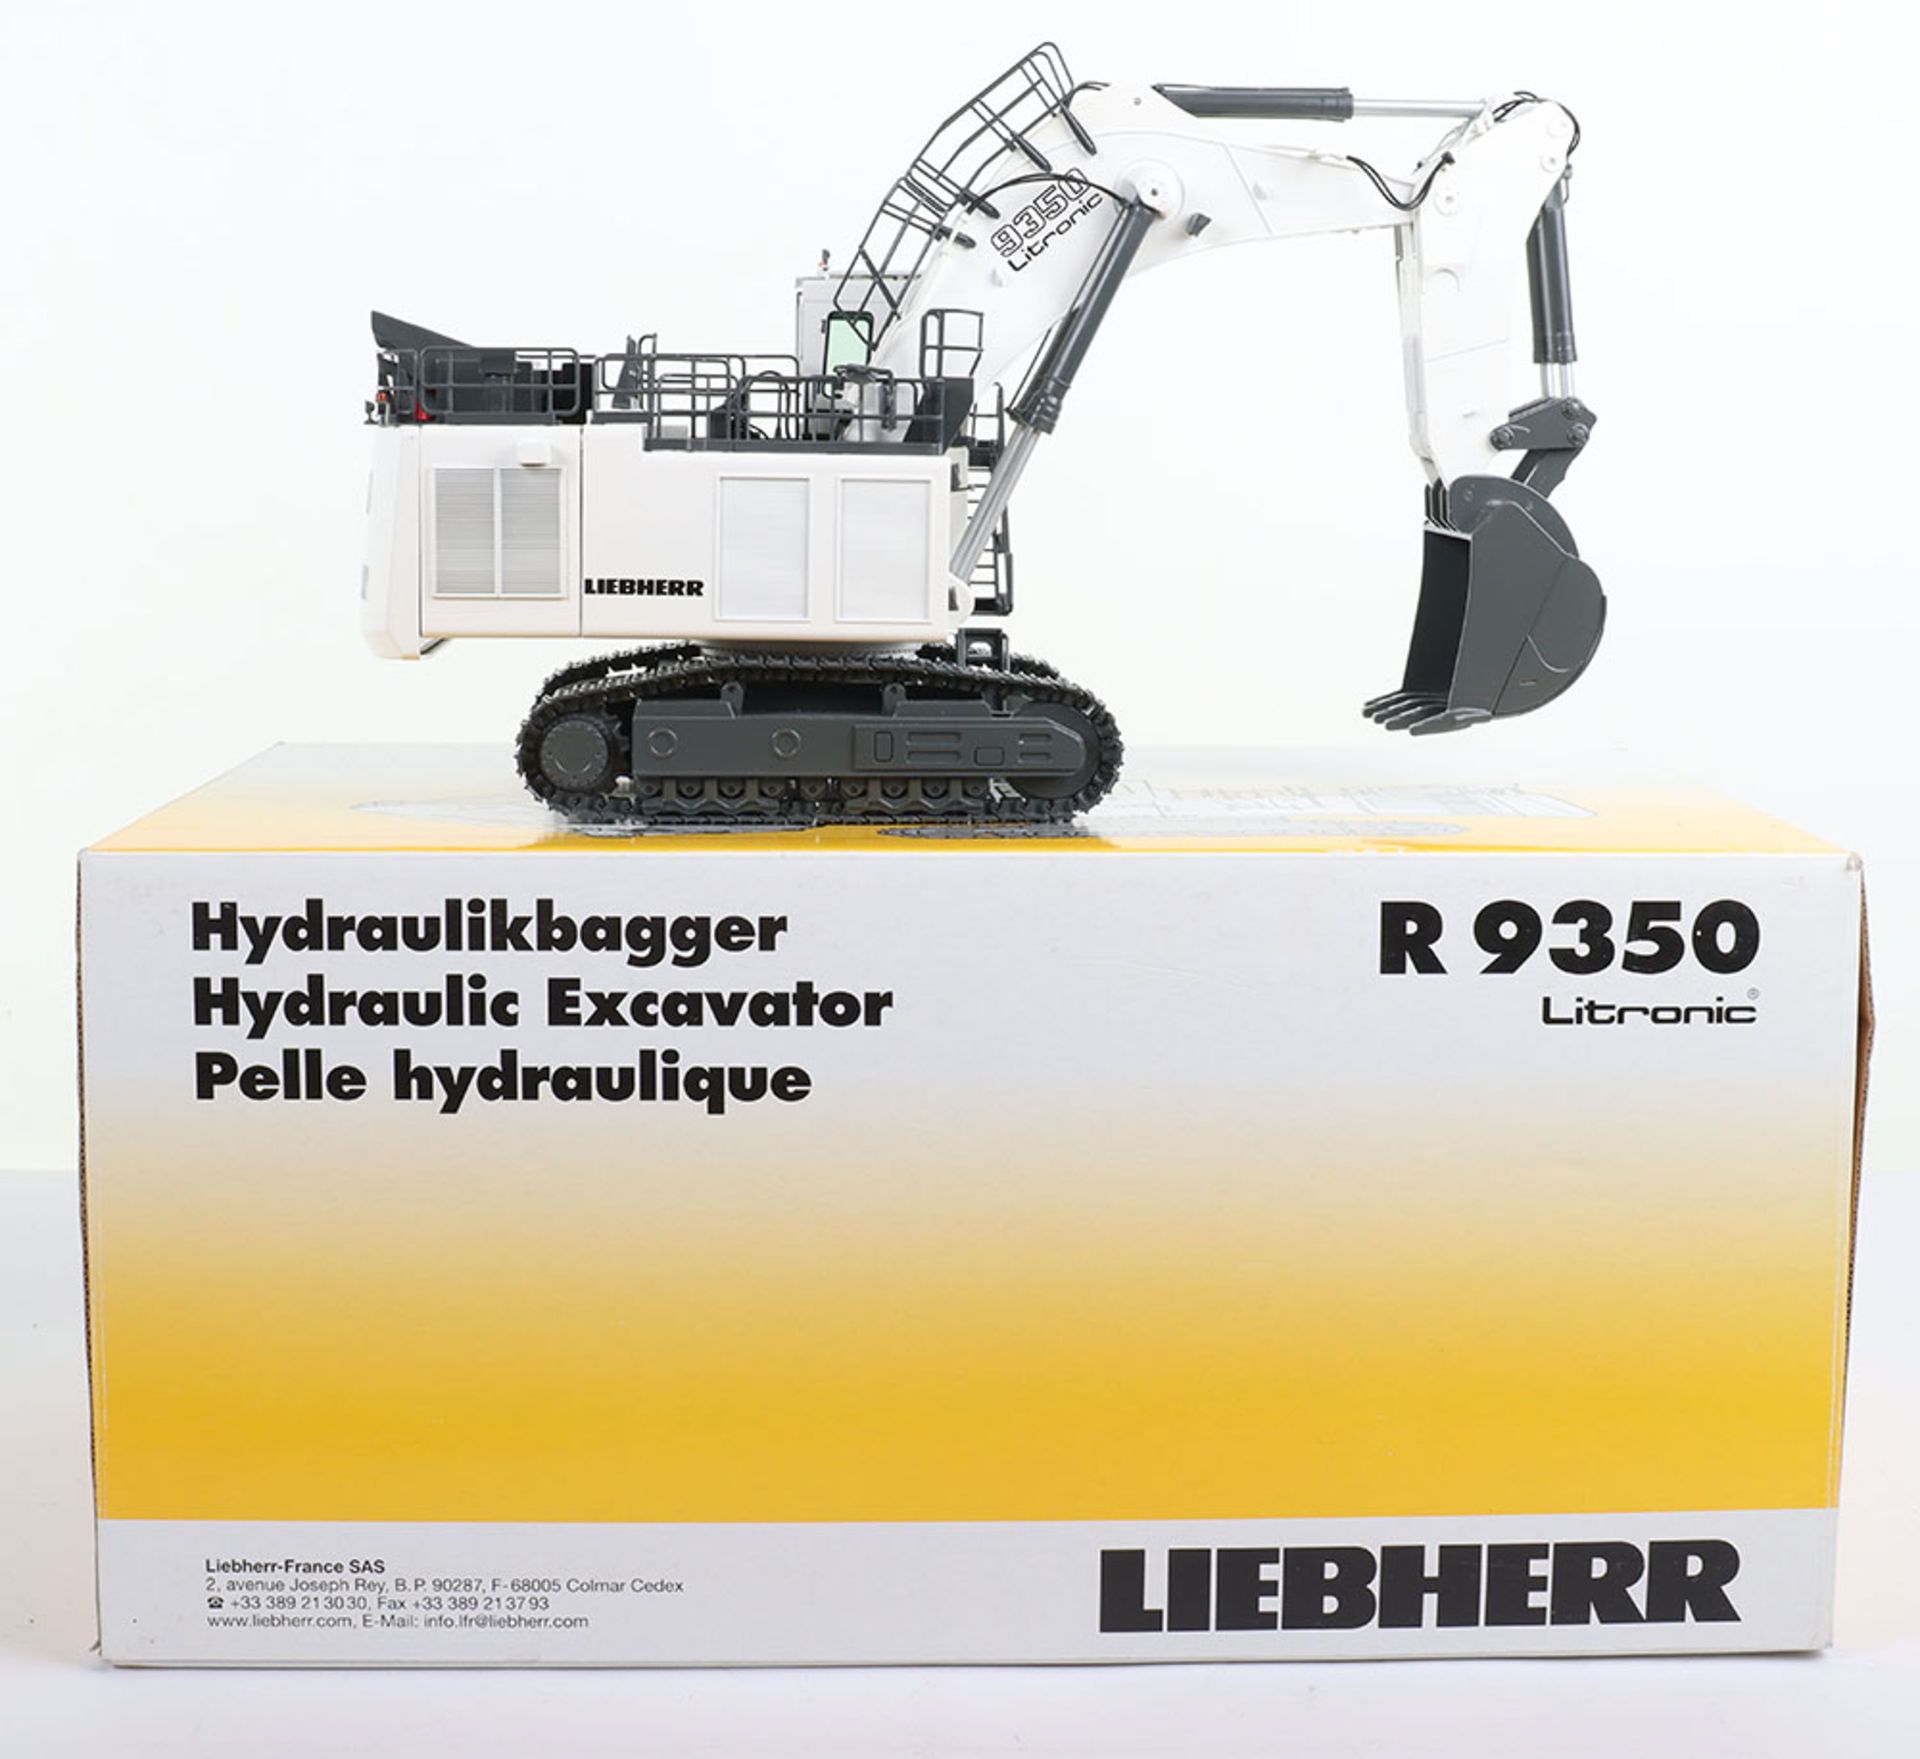 A NZG Liebherr 1:50 scale diecast R9350 Litronic Hydraulic Excavator